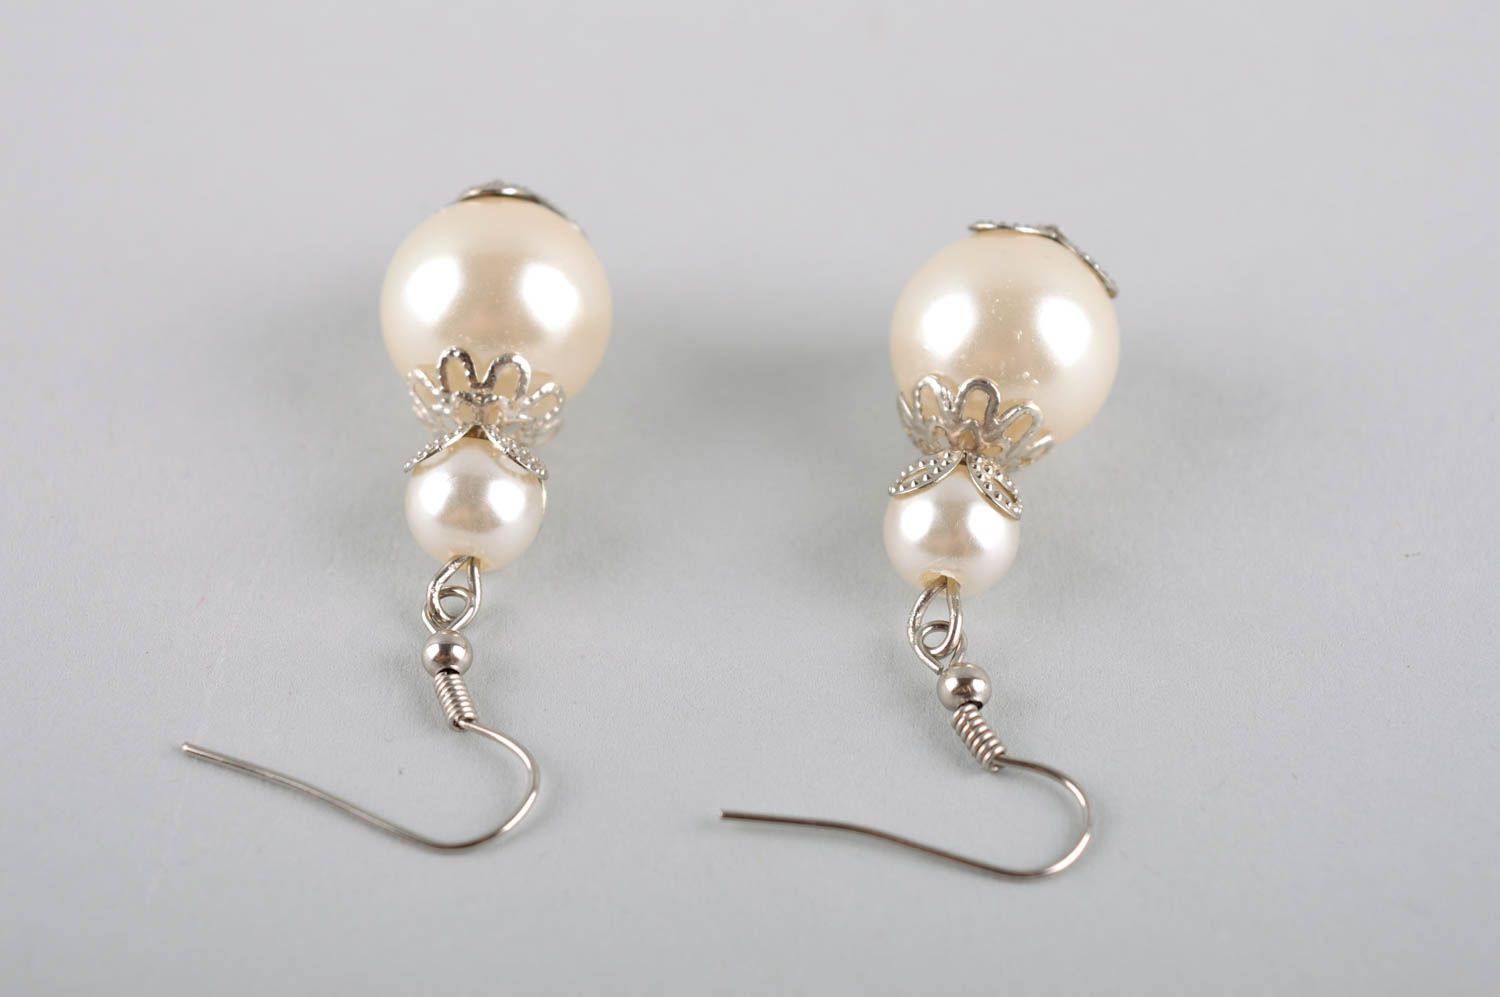 Homemade jewelry designer earrings cute earrings fashion accessories gift ideas photo 5